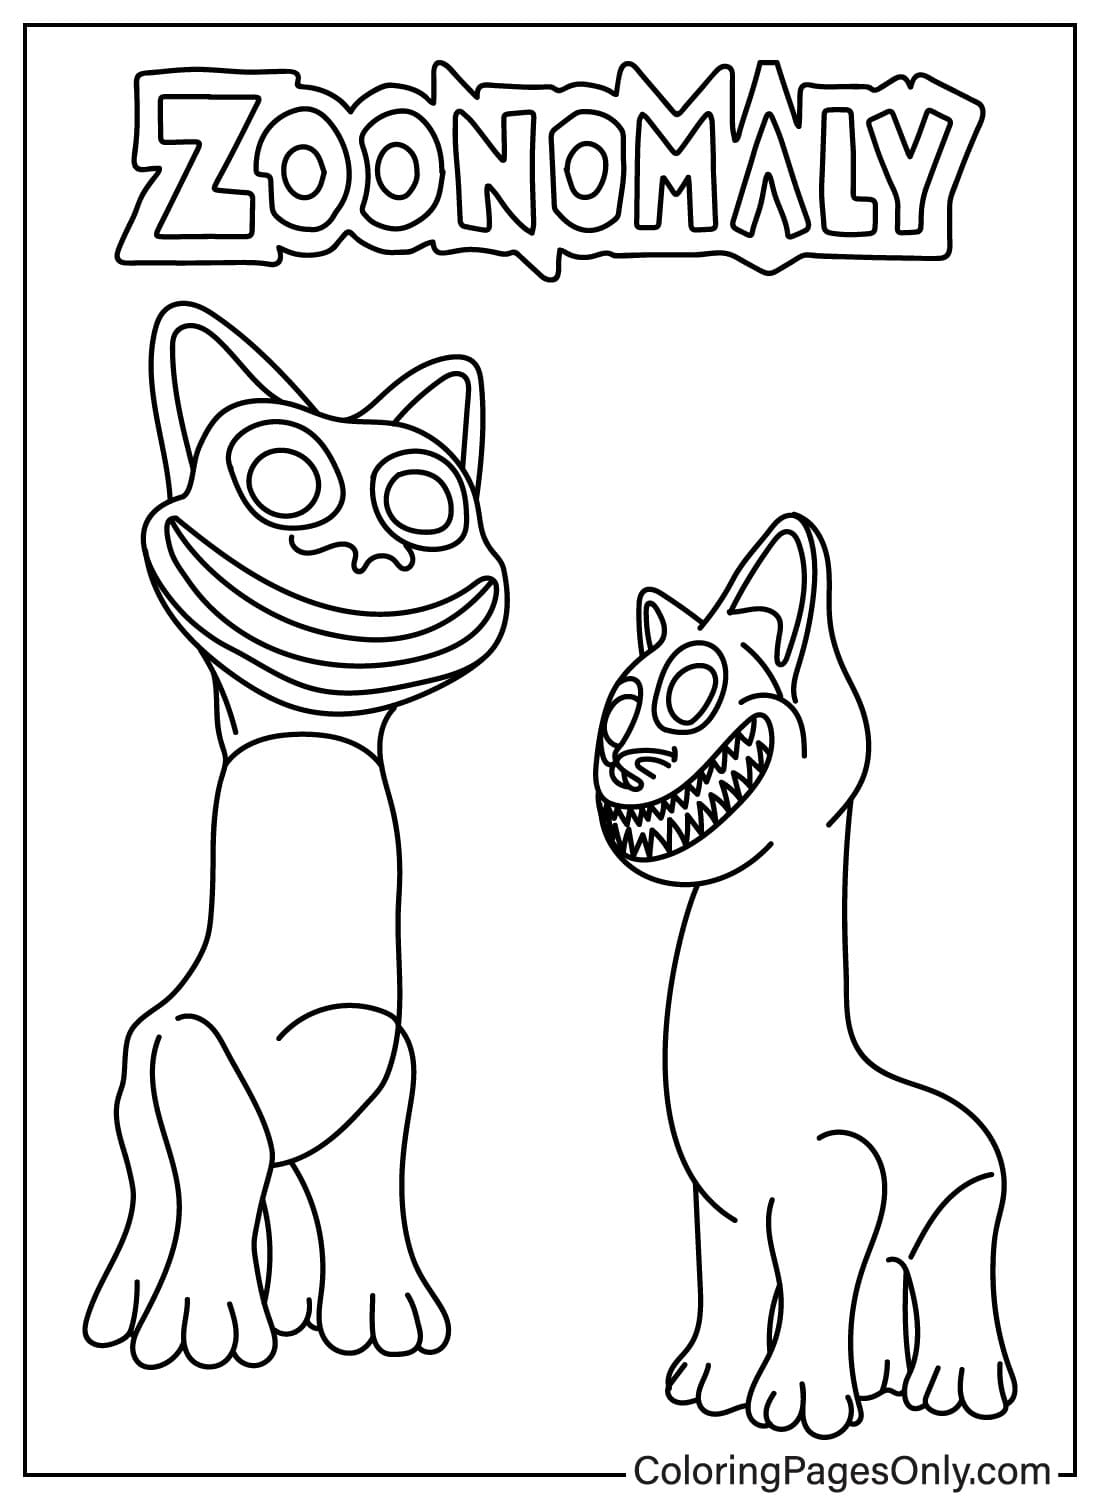 Página para colorir de Zoonomaly Monster Smile Cat de Zoonomaly